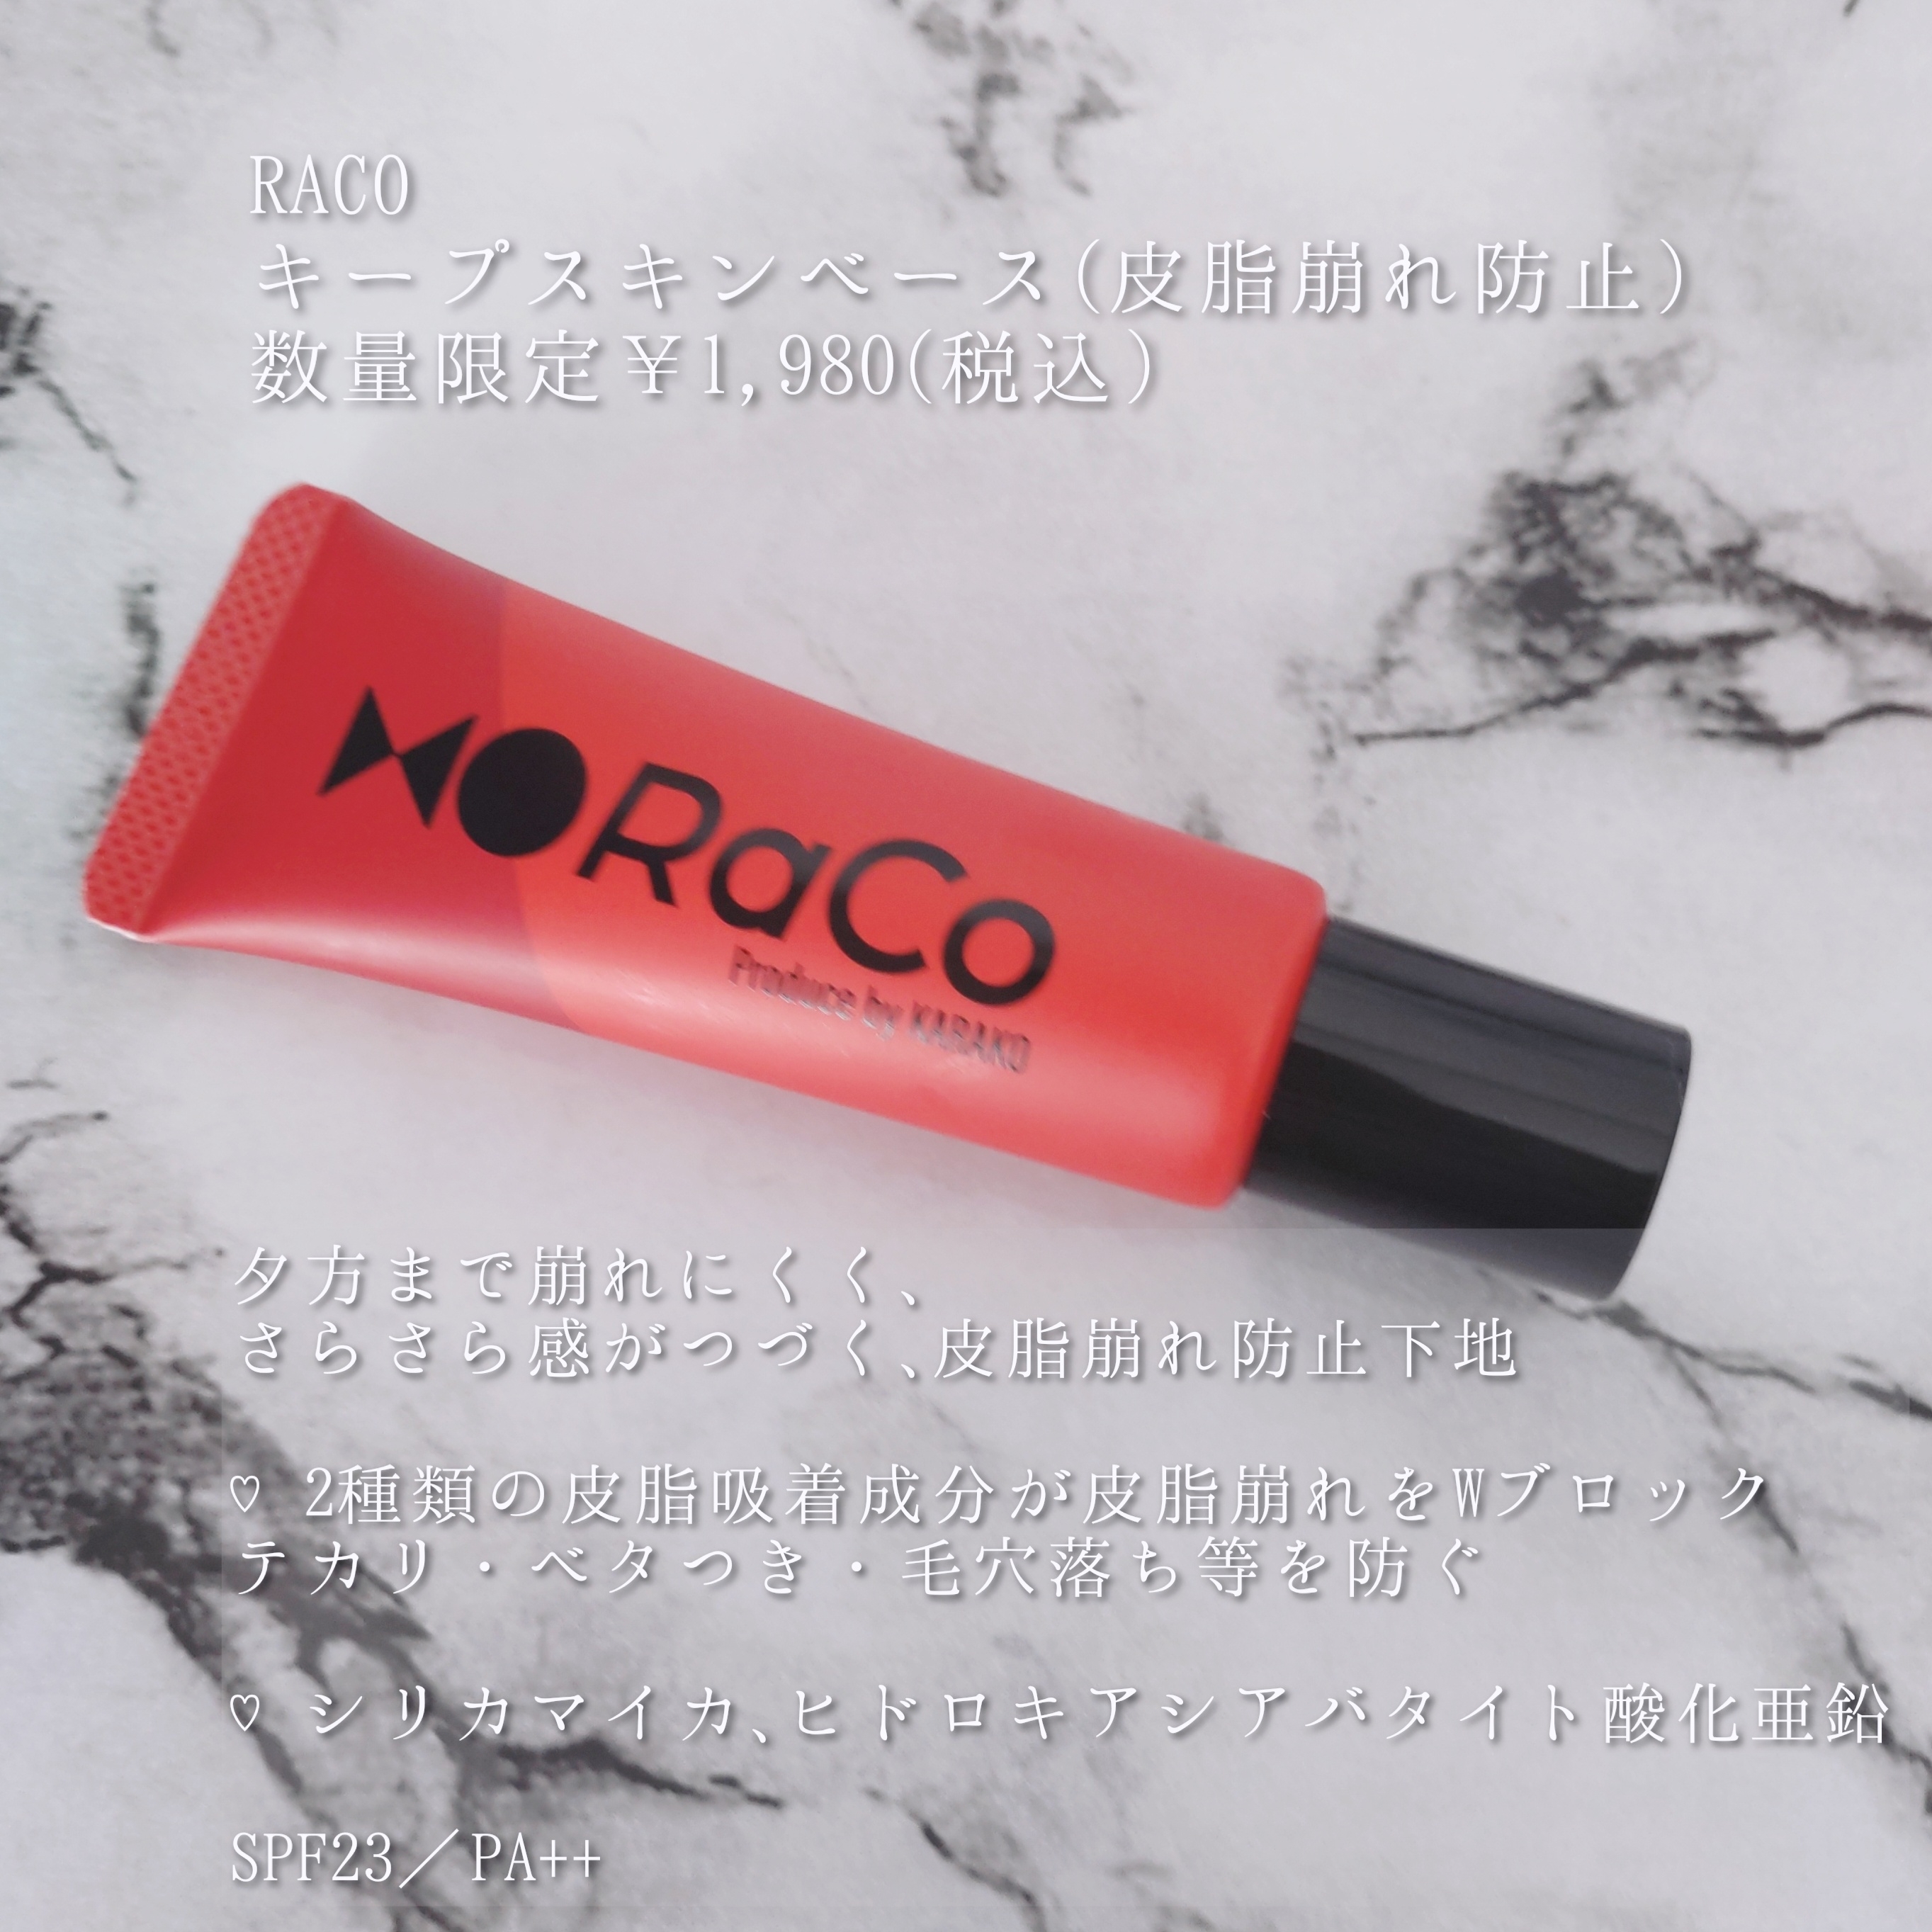 RACO キープスキンベース(皮脂崩れ防止)を使ったYuKaRi♡さんのクチコミ画像3